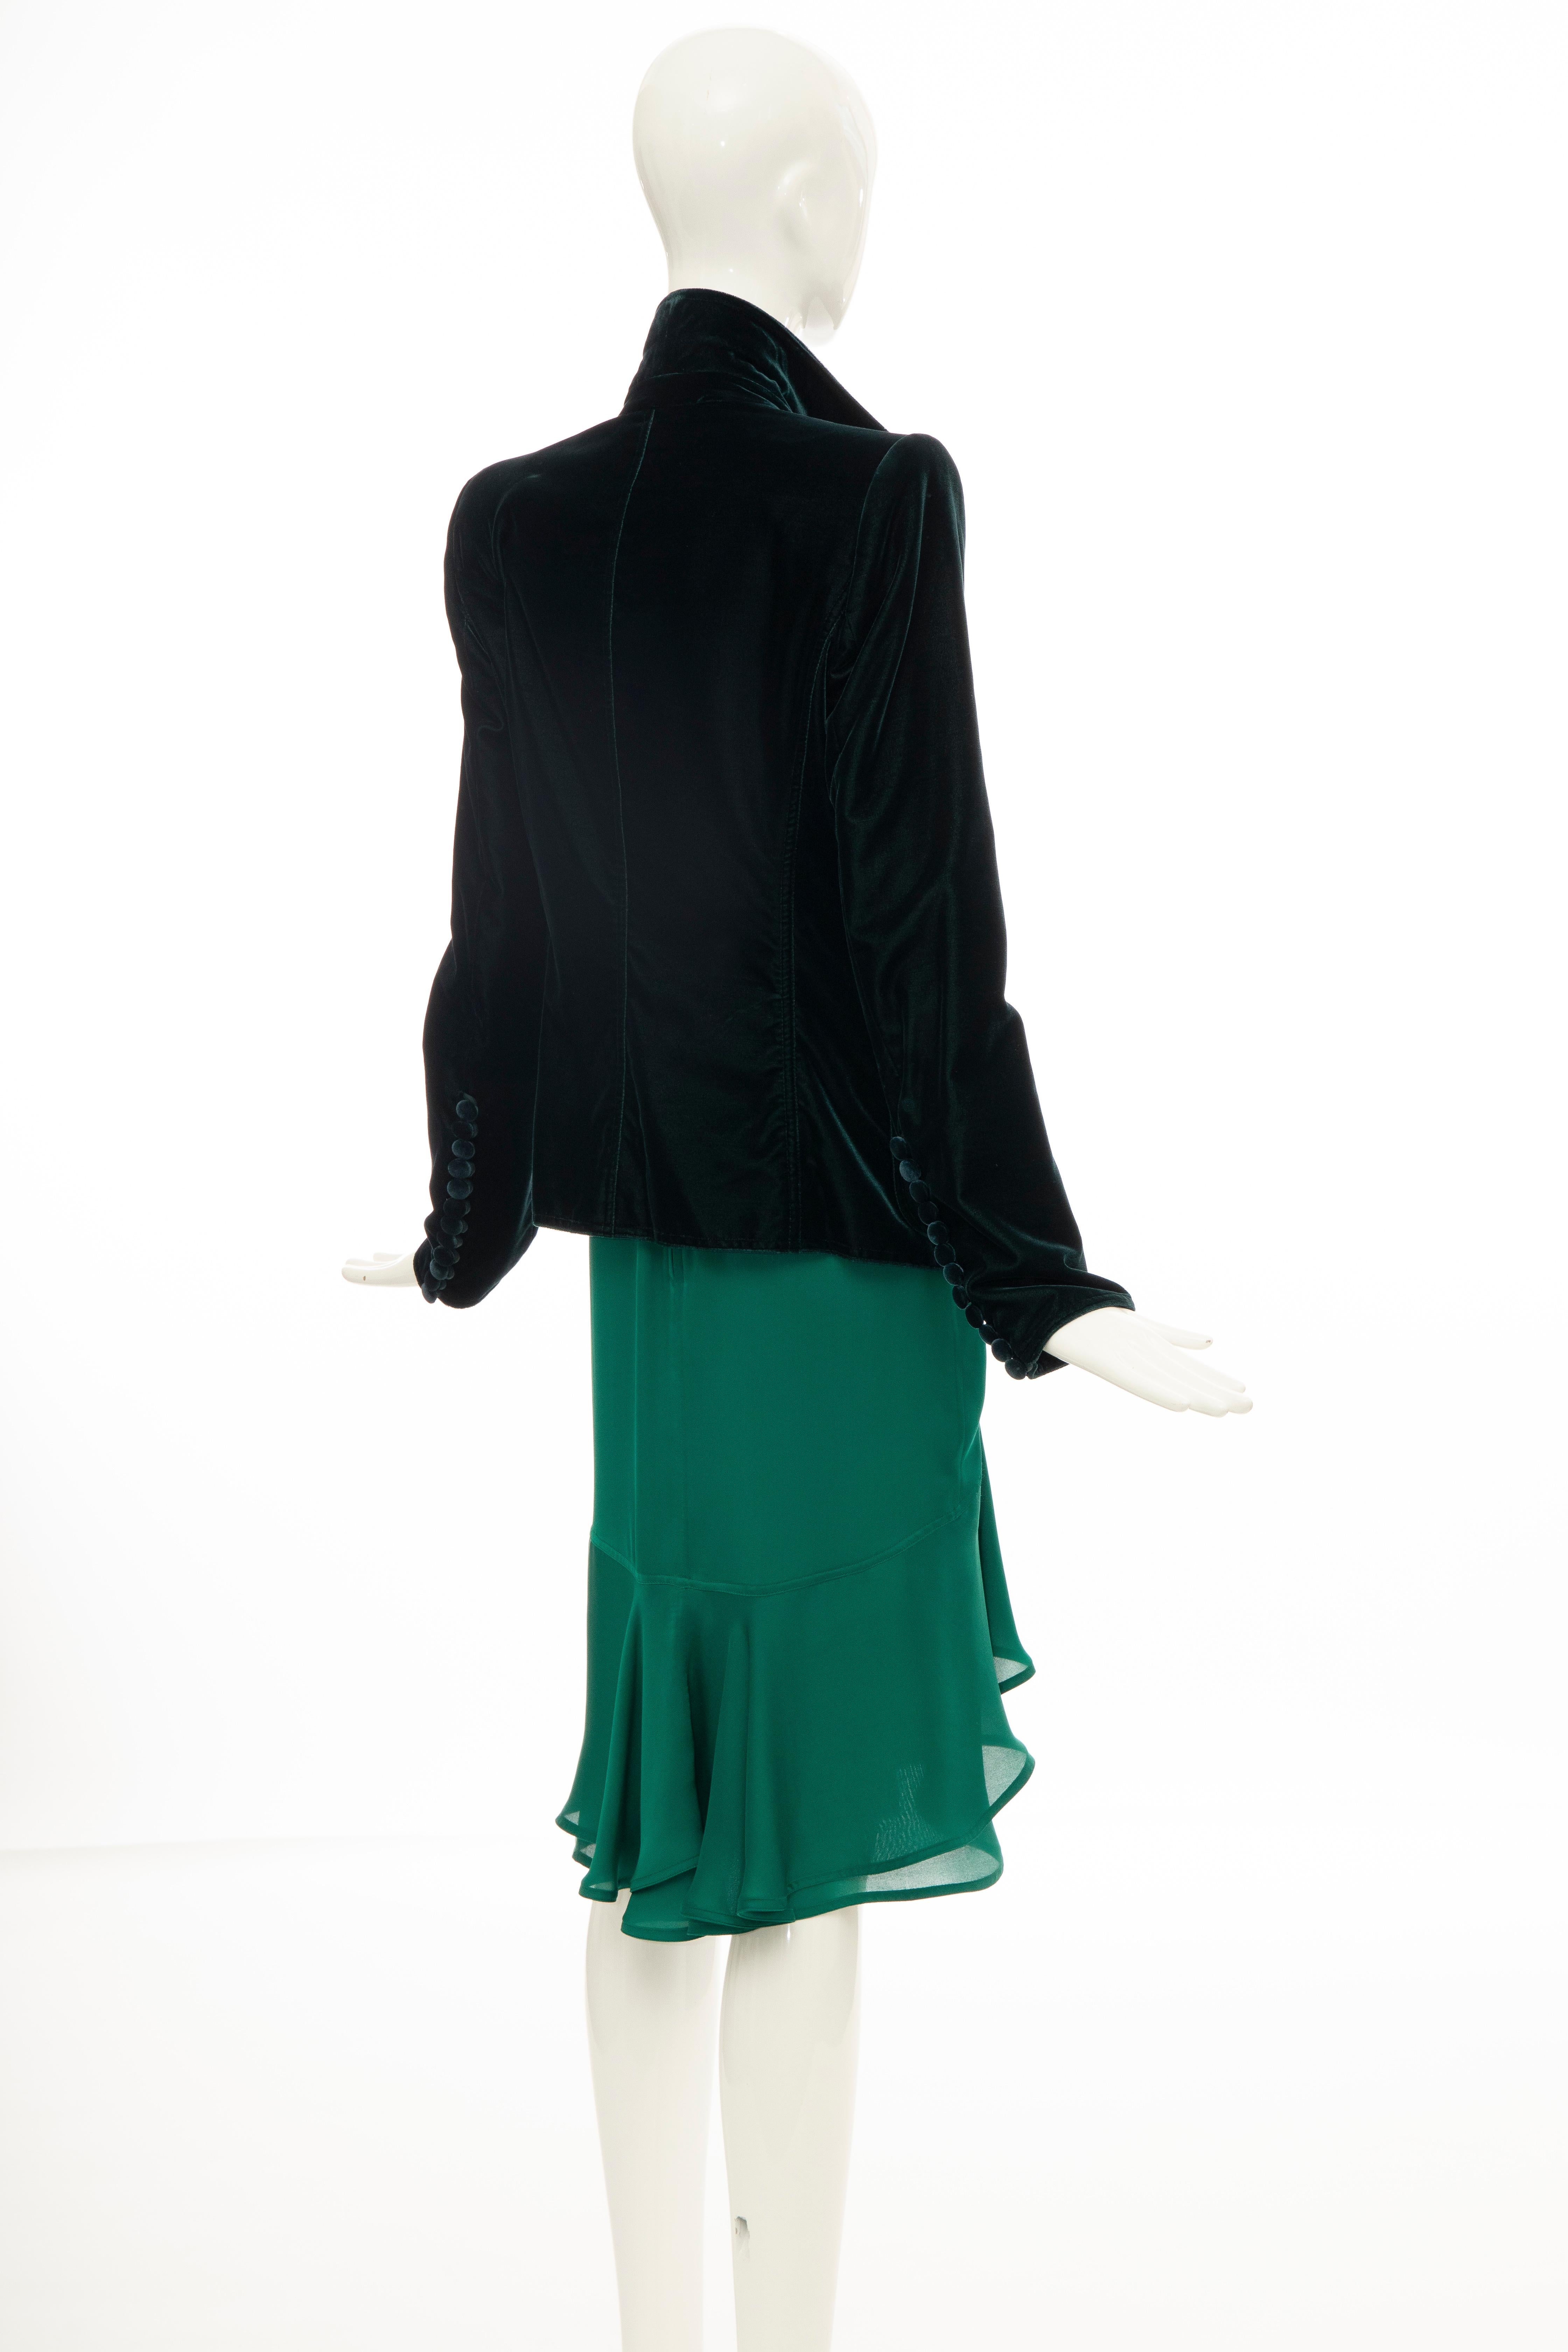 Tom Ford for Yves Saint Laurent Emerald Green Velvet Silk Dress Suit,  Fall 2003 In Good Condition In Cincinnati, OH